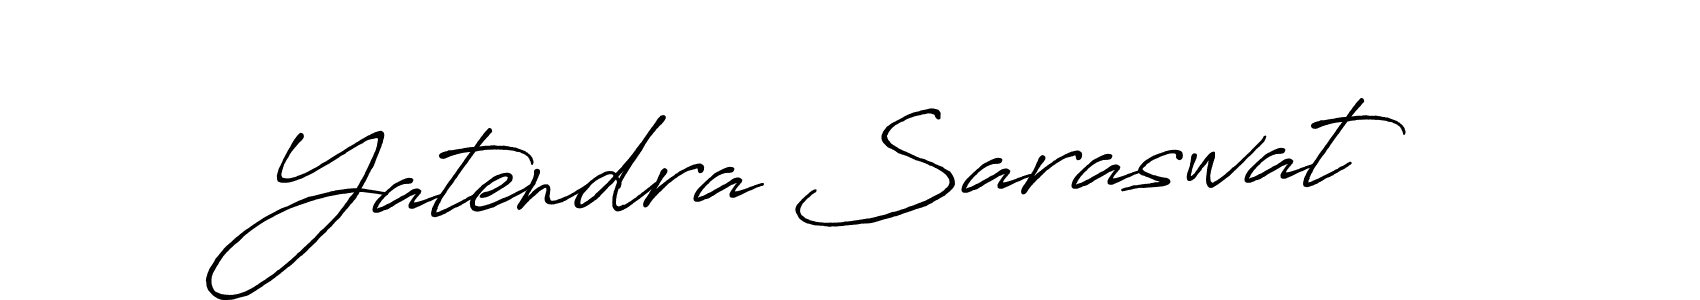 How to Draw Yatendra Saraswat signature style? Antro_Vectra_Bolder is a latest design signature styles for name Yatendra Saraswat. Yatendra Saraswat signature style 7 images and pictures png